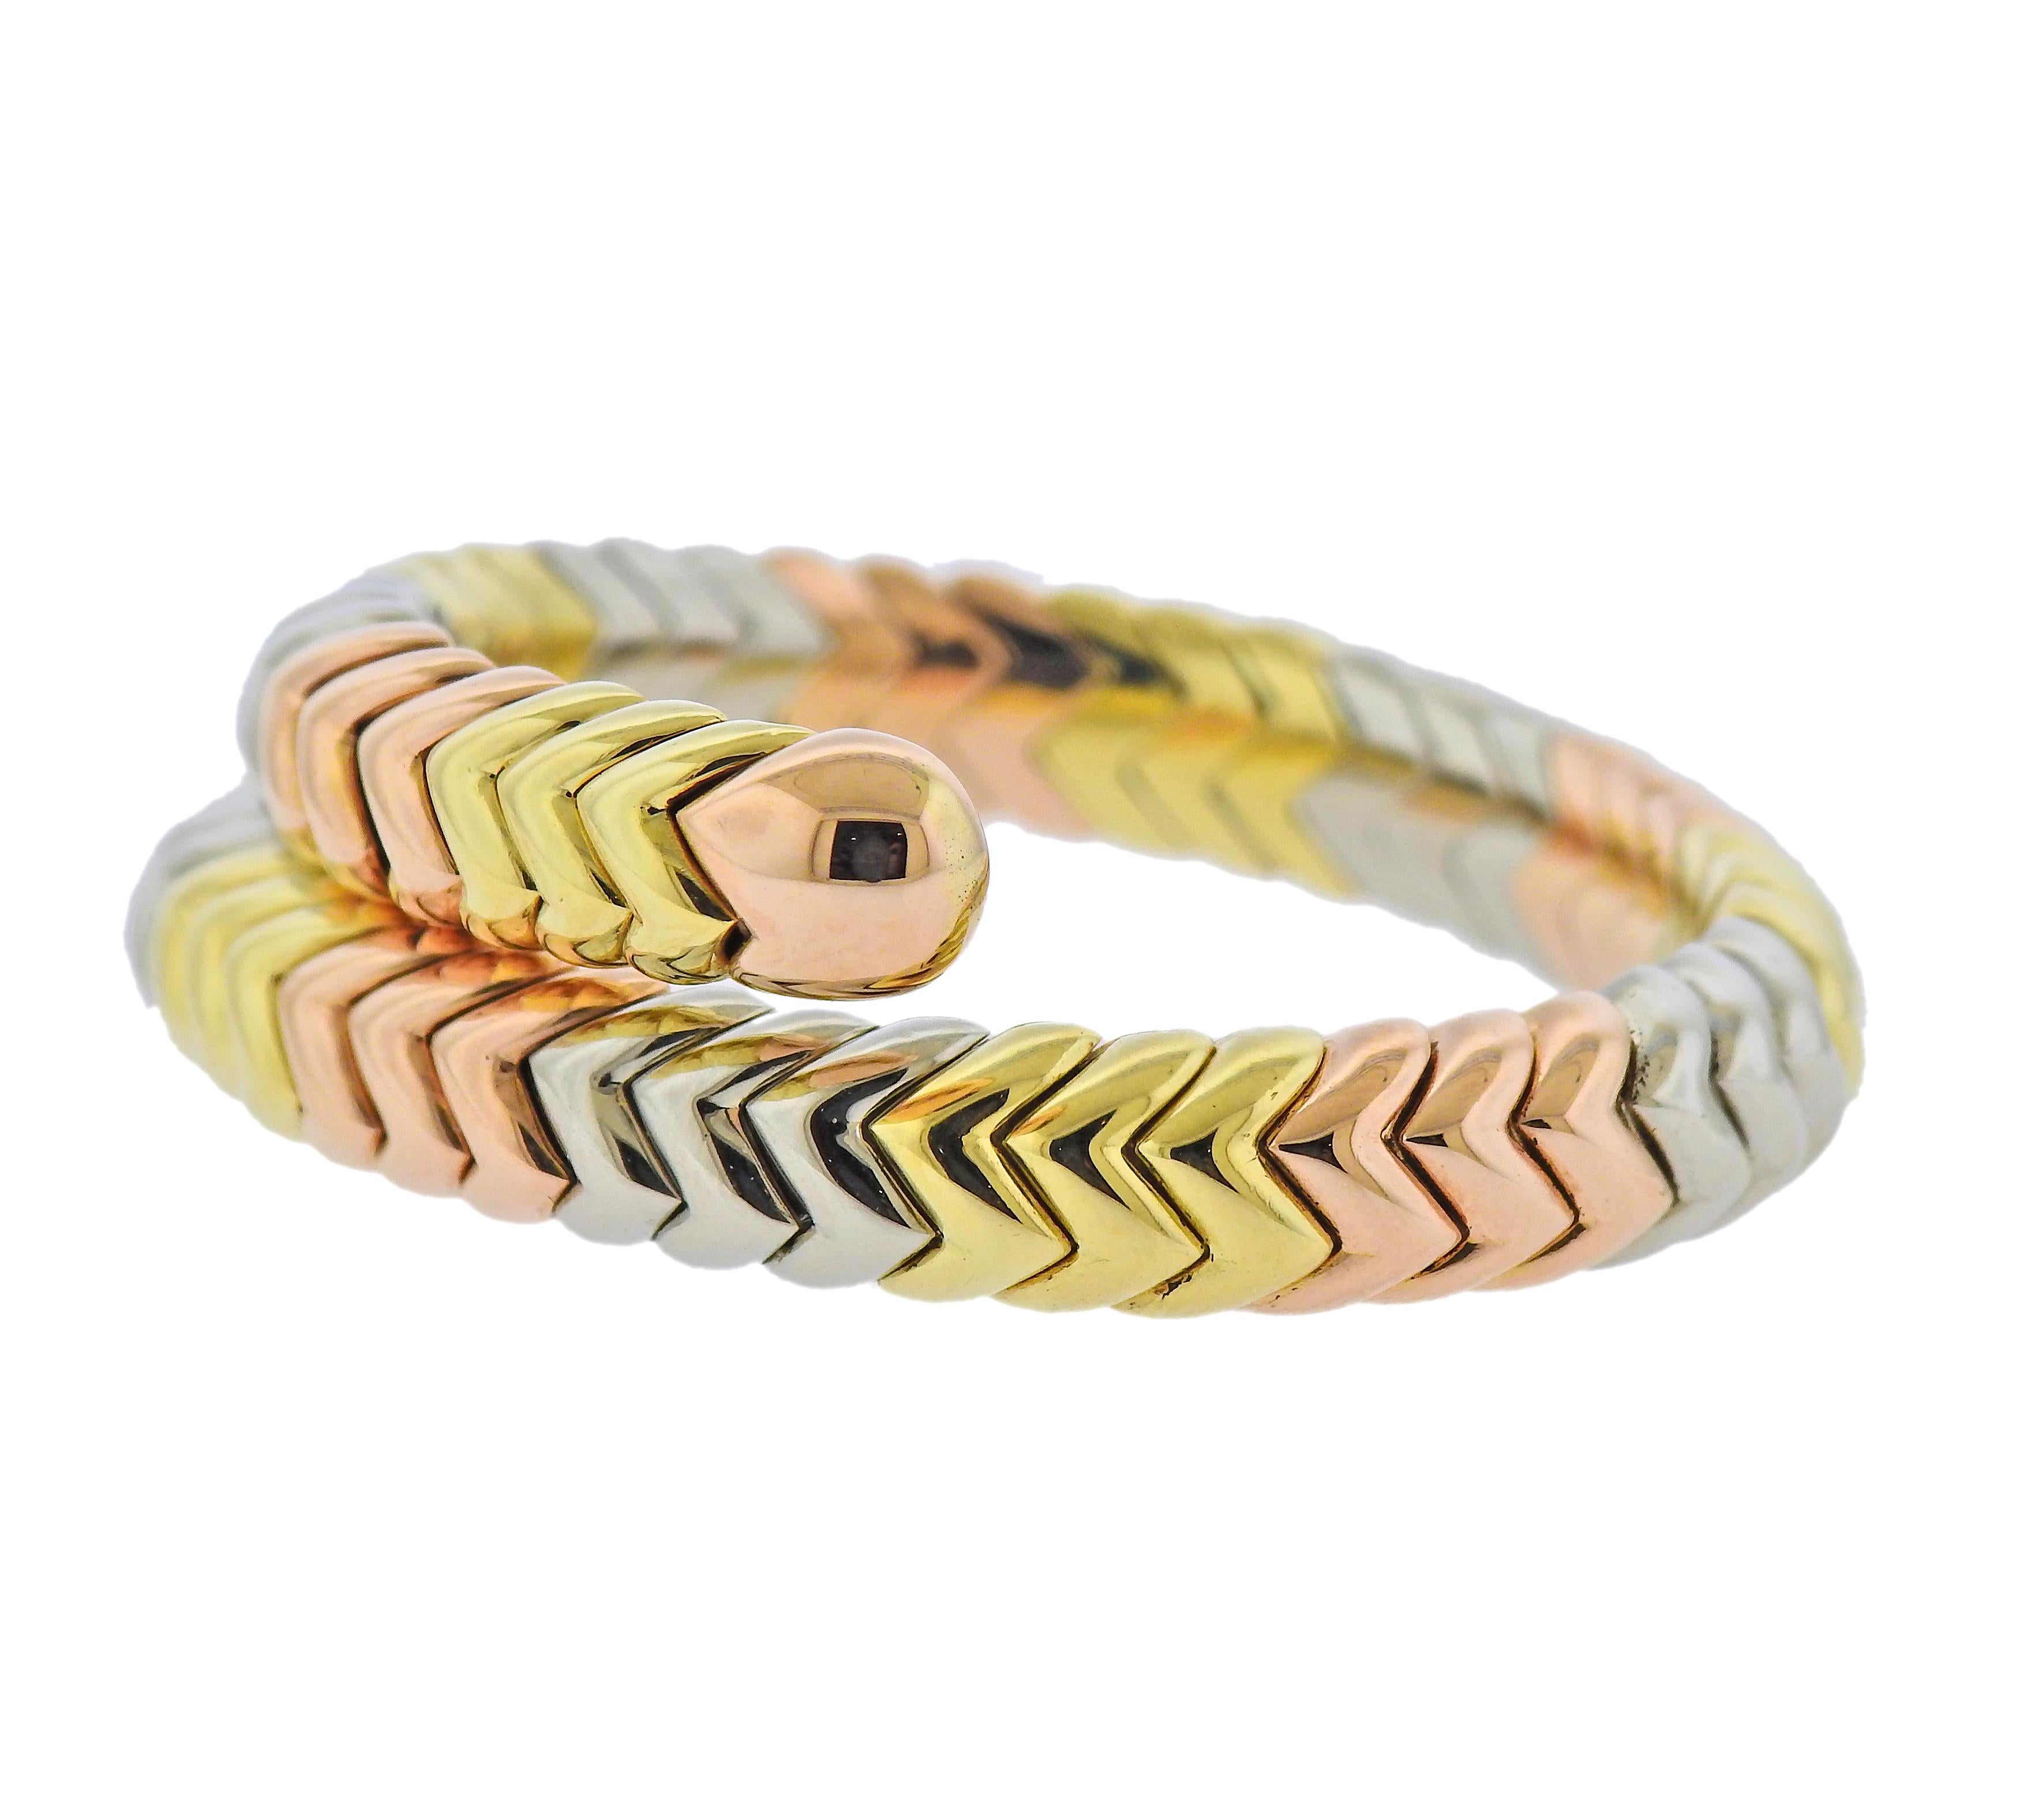 18k tri color gold Spiga wrap bracelet by Bvlgari. Bracelet will fit approx. 6-6.5